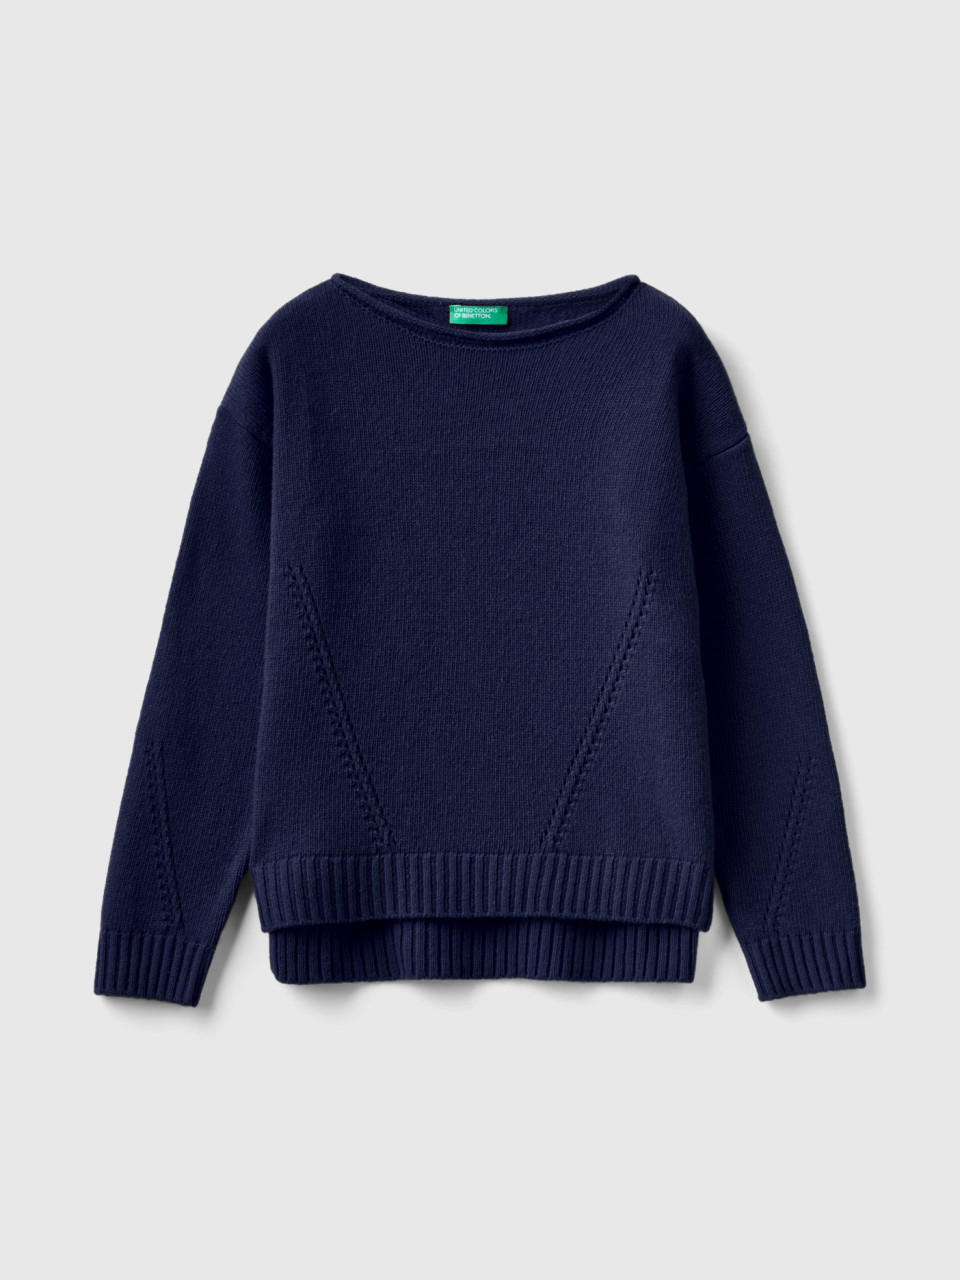 Benetton, Knit Sweater With Playful Stitching, Dark Blue, Kids